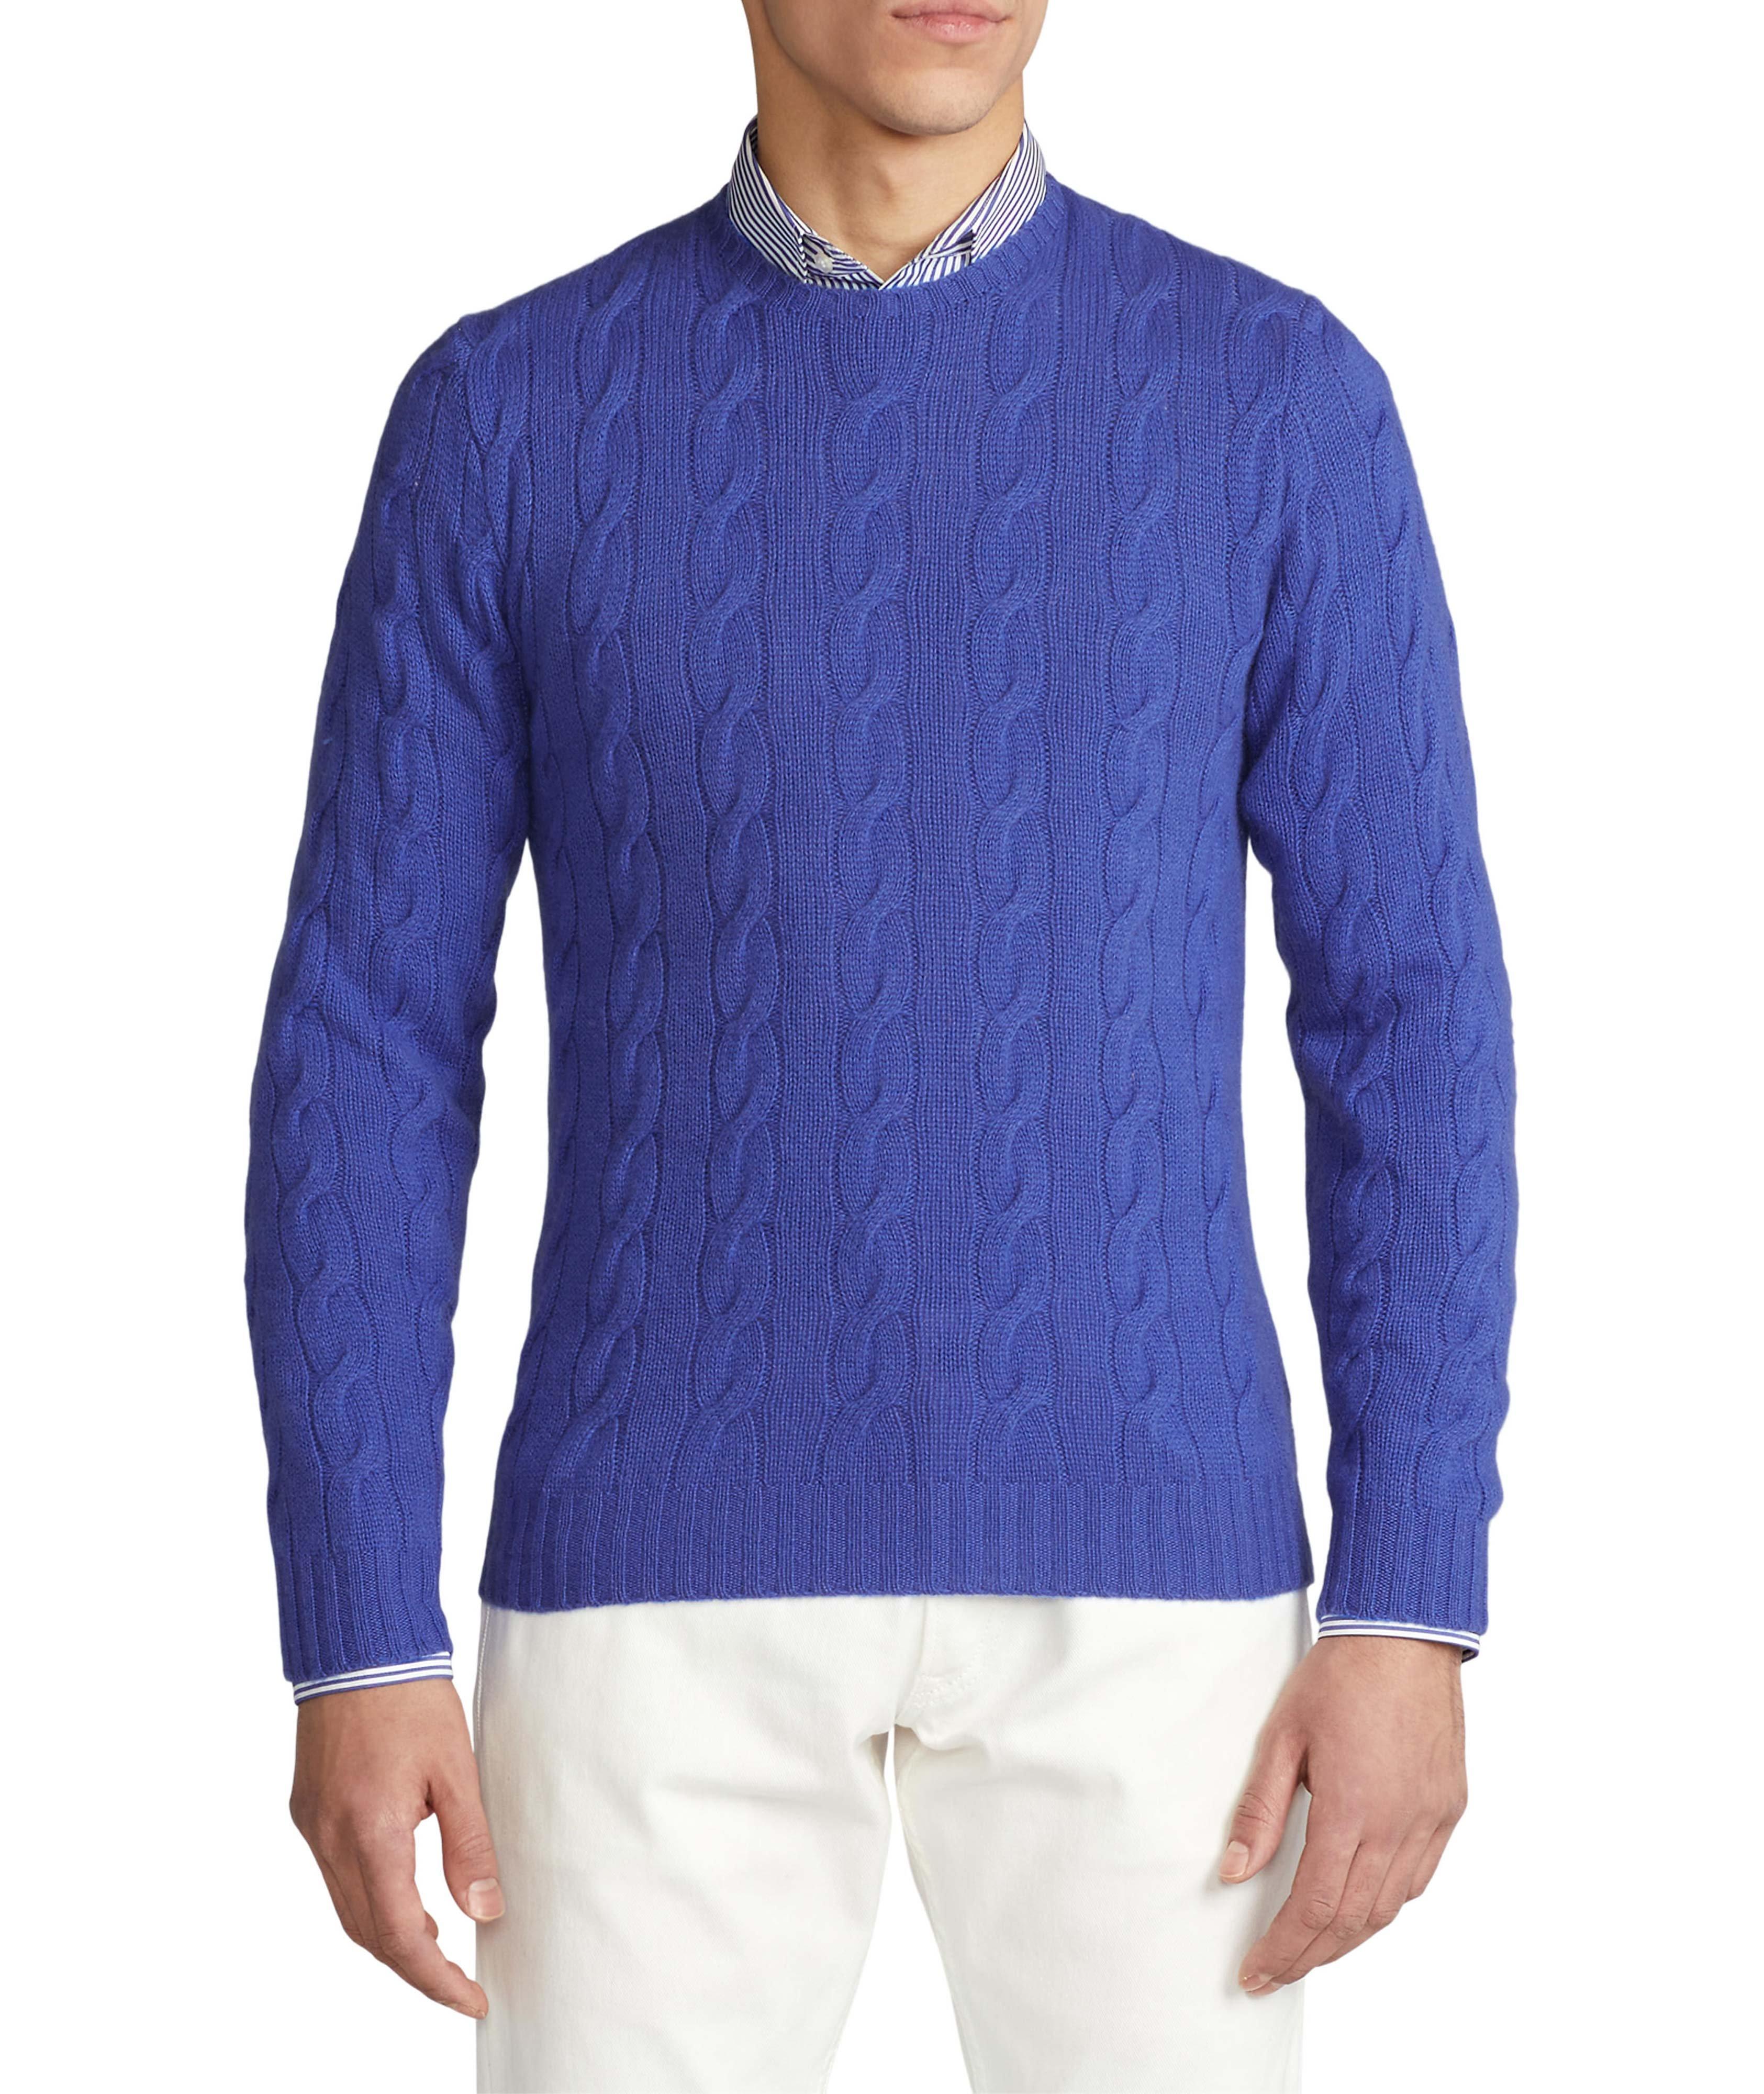 Ralph Lauren Purple Label Cable-Knit Cashmere Sweater | Sweaters ...